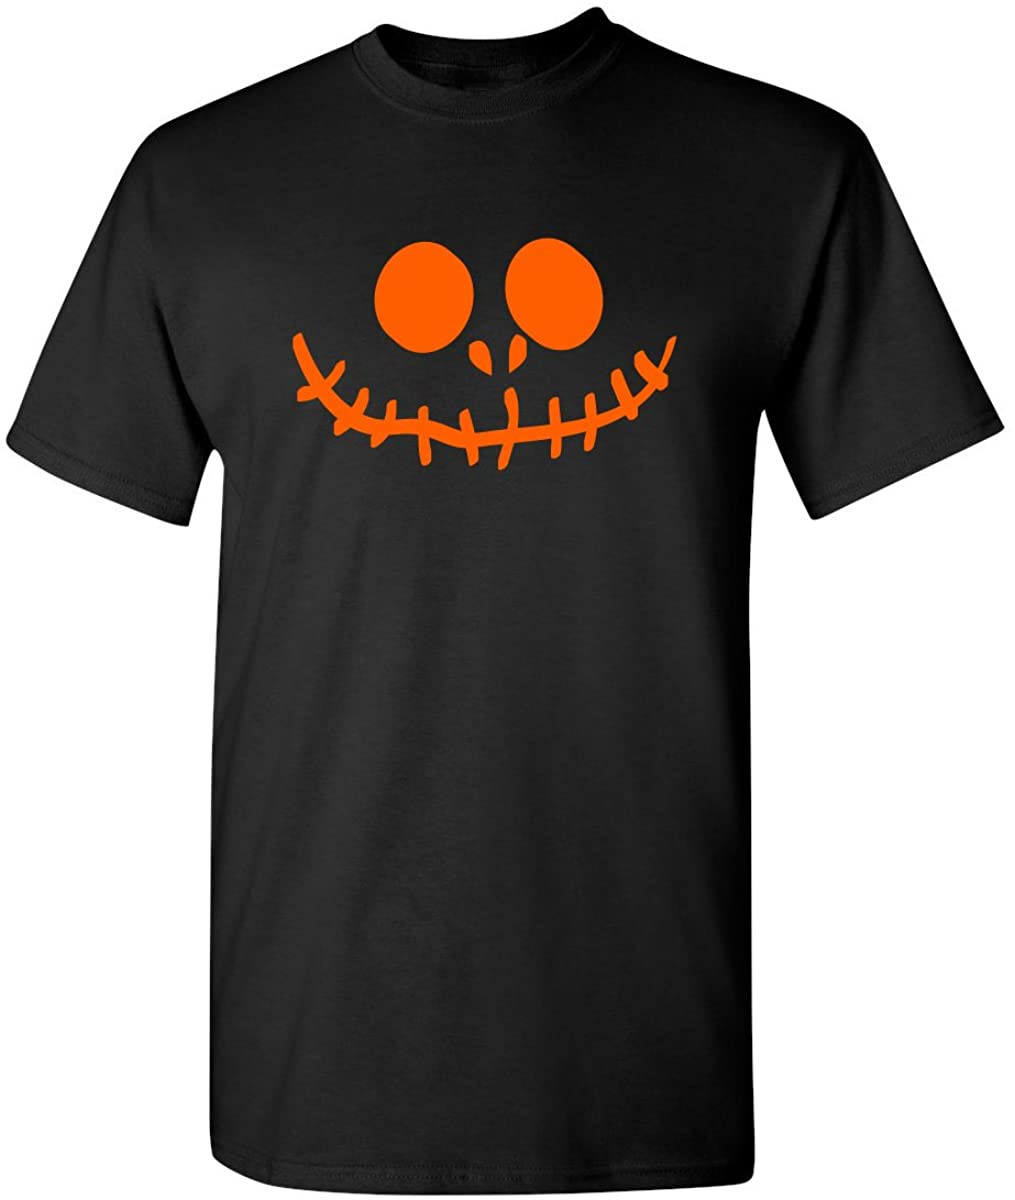 Stitched Pumpkin Emoticon Graphic Costume Halloween T-Shirt